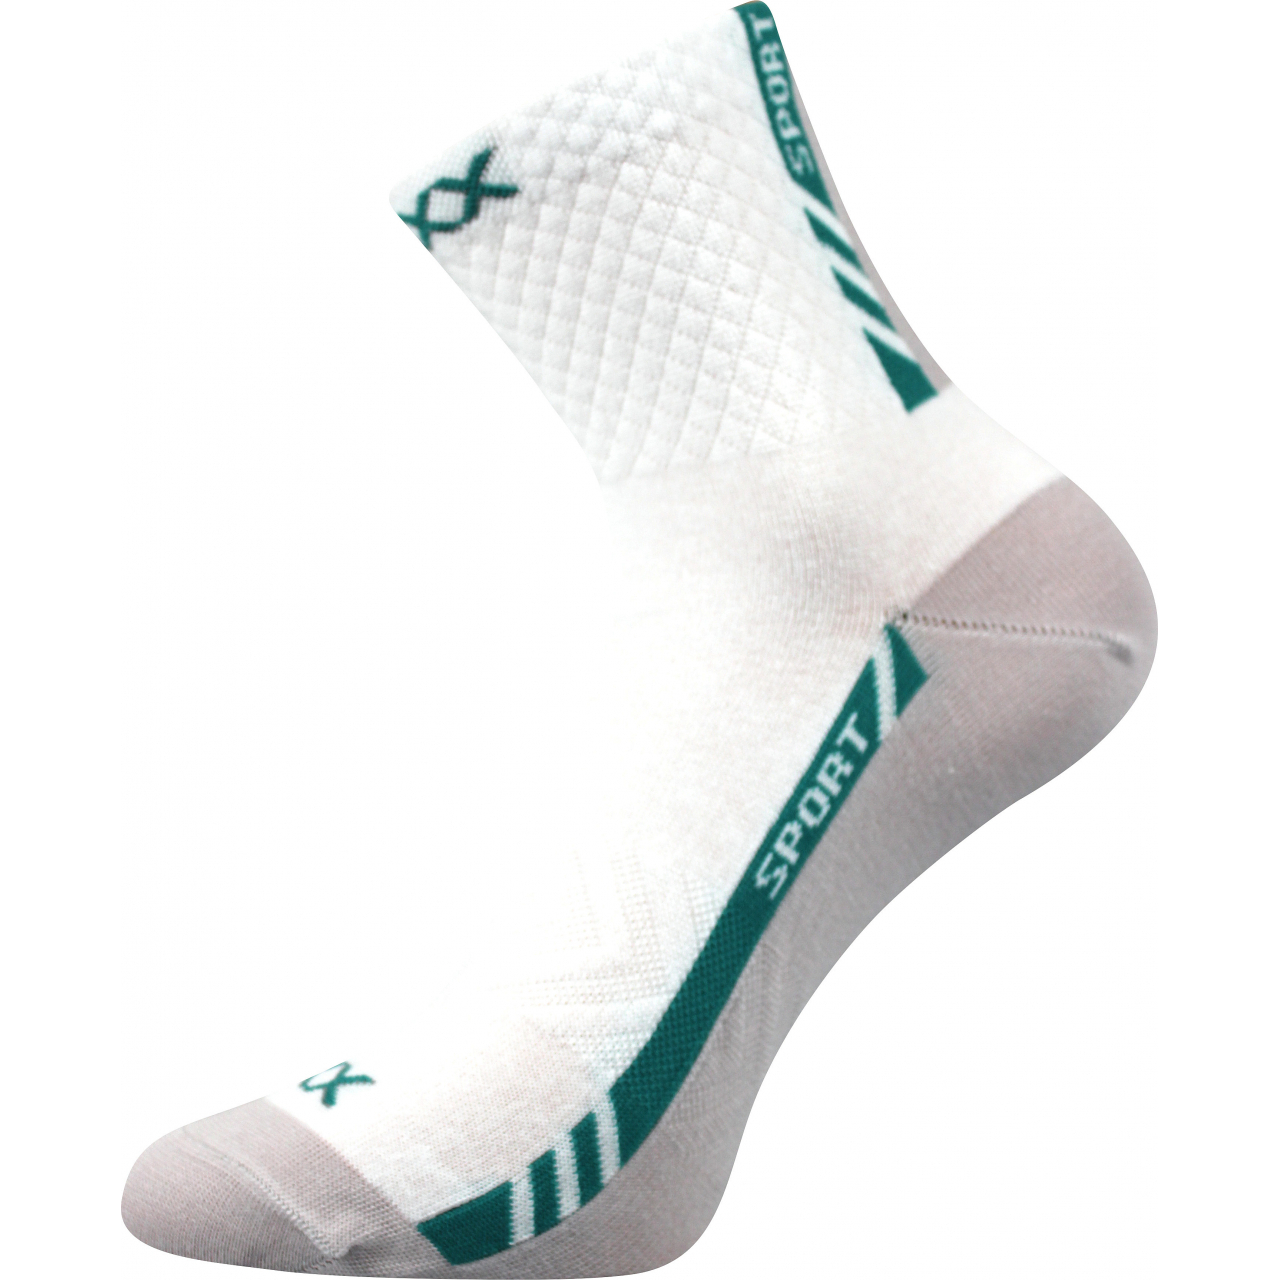 Ponožky sportovní Voxx Pius - bílé-šedé, 43-46